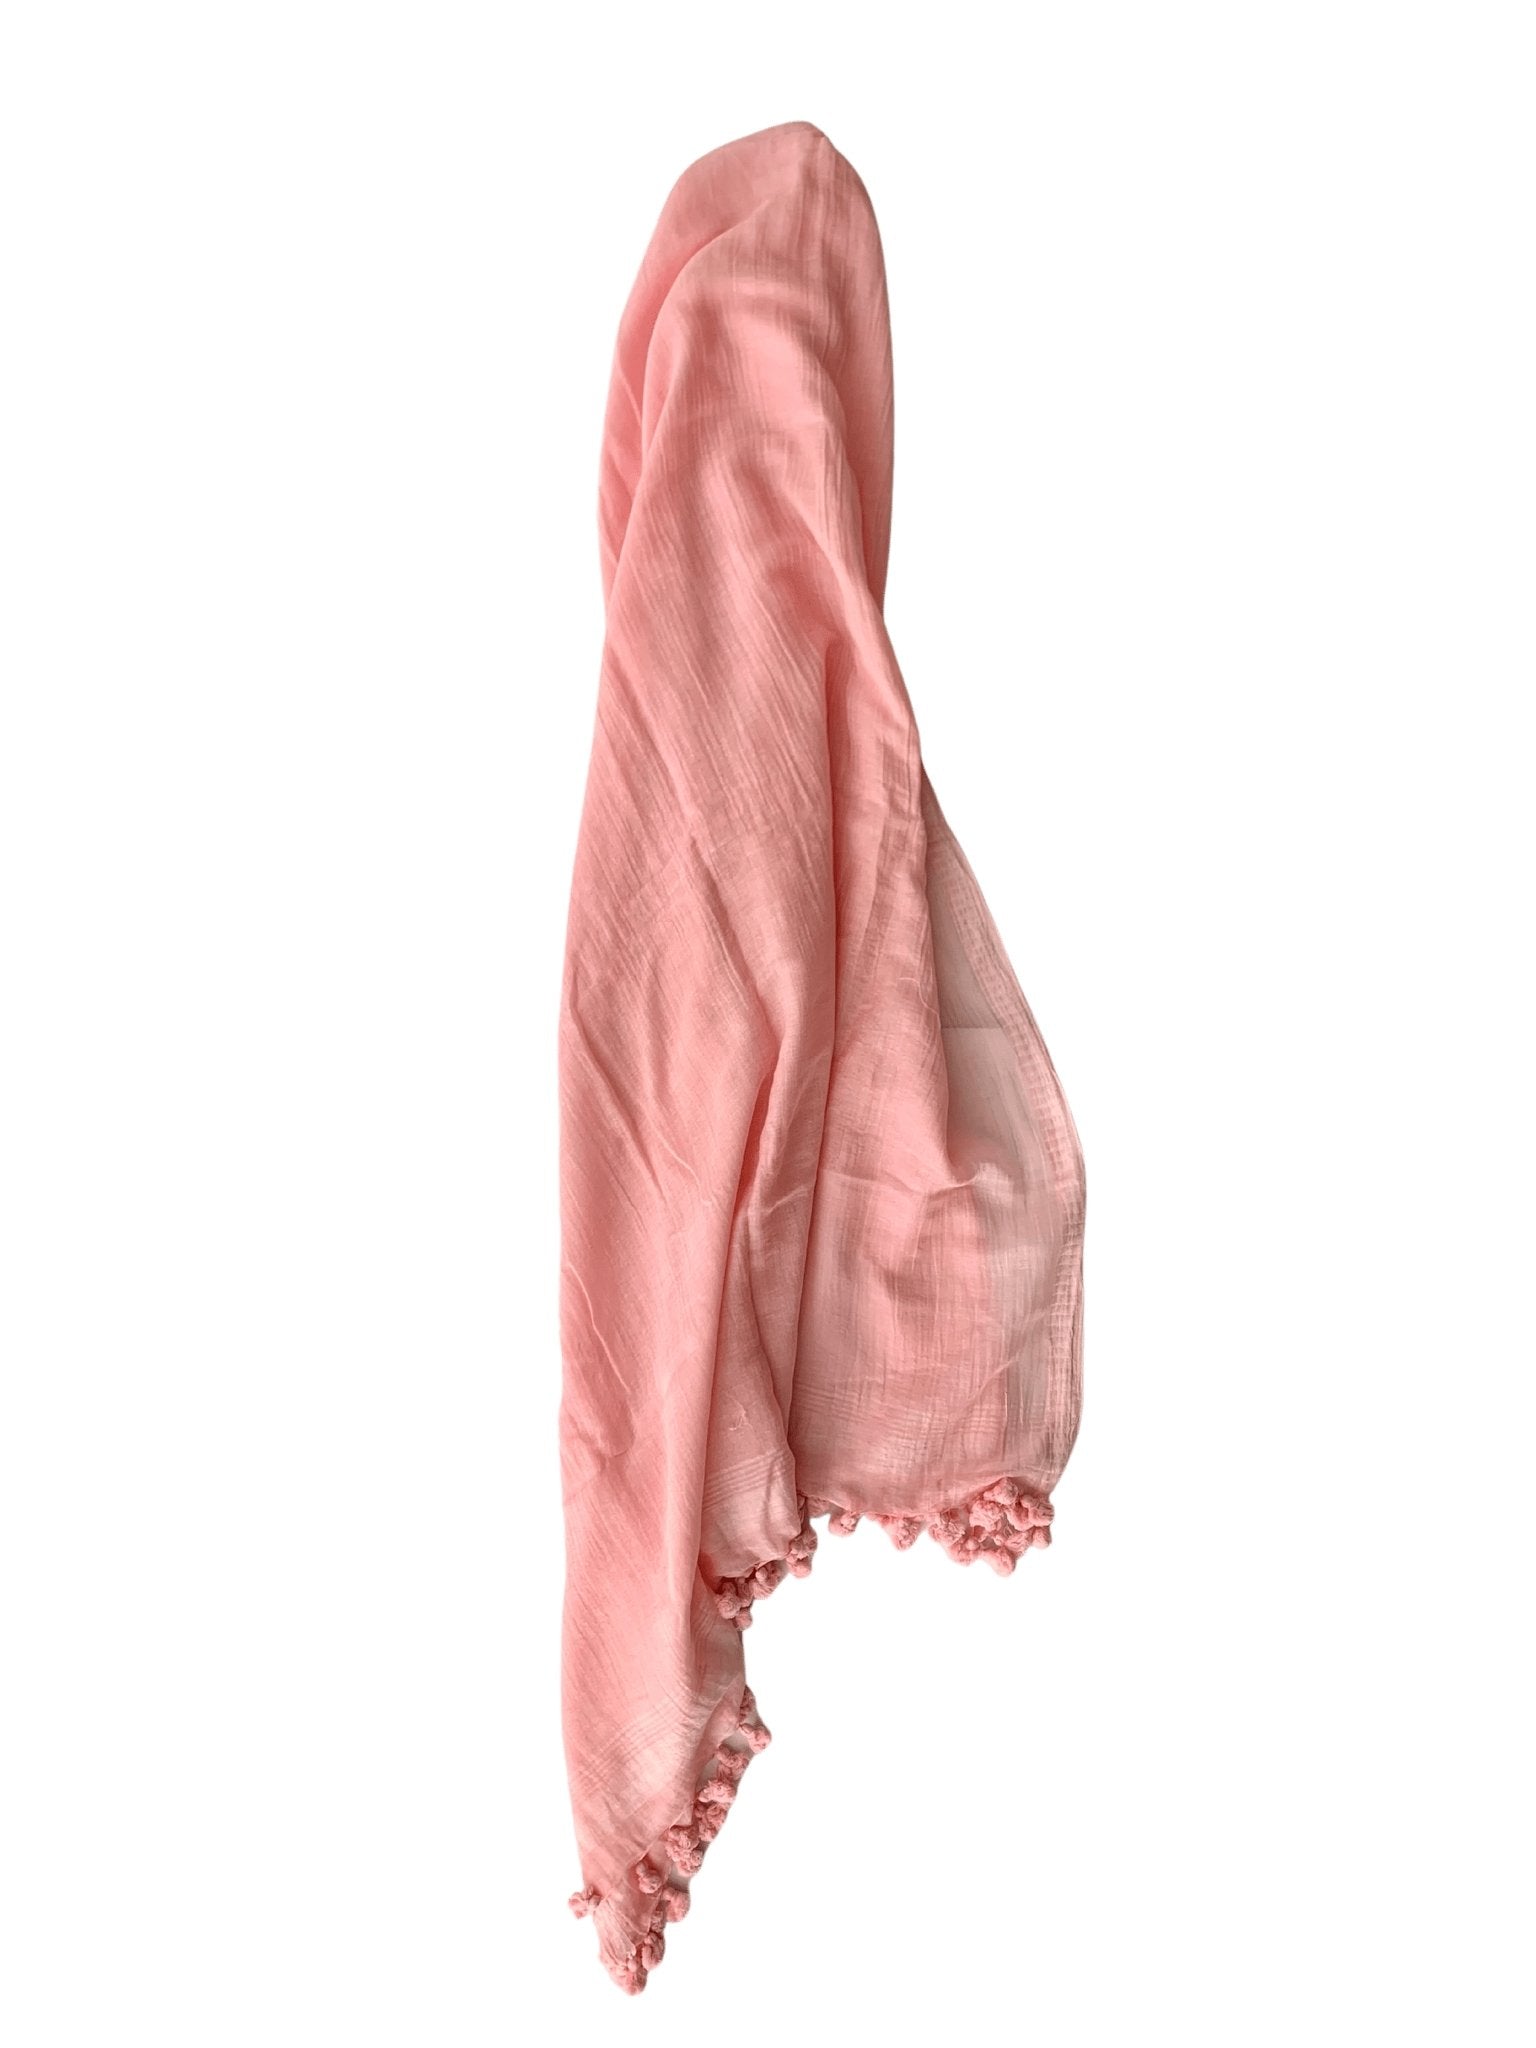 Tassel Scarf - Pale Pink - Imli.lifestyle